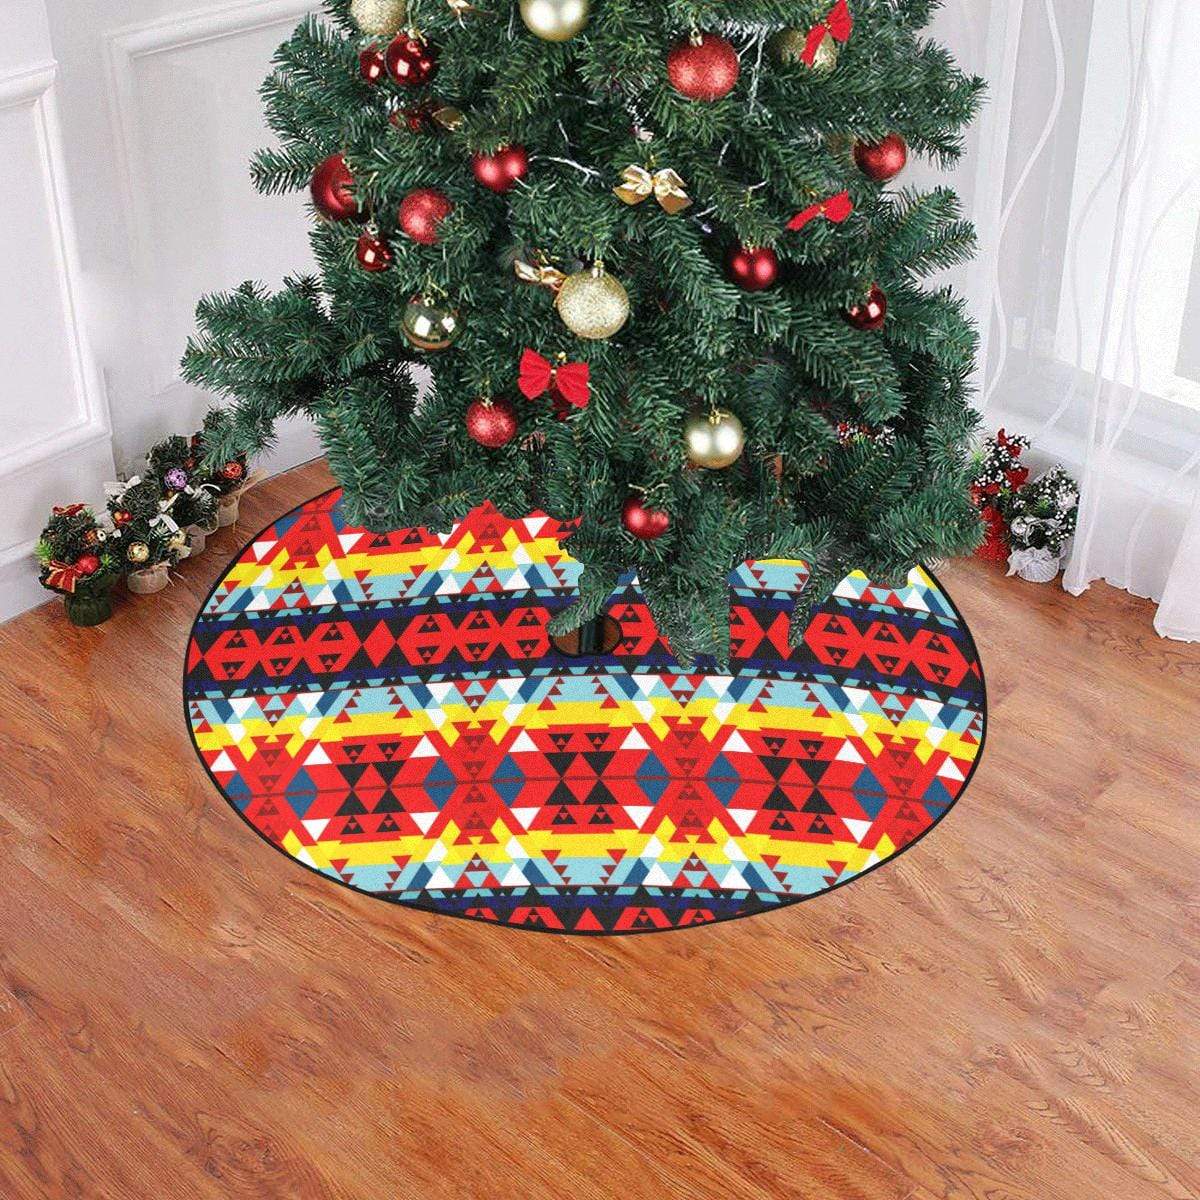 Writing on Stone Enemy Retreat Christmas Tree Skirt 47" x 47" Christmas Tree Skirt e-joyer 